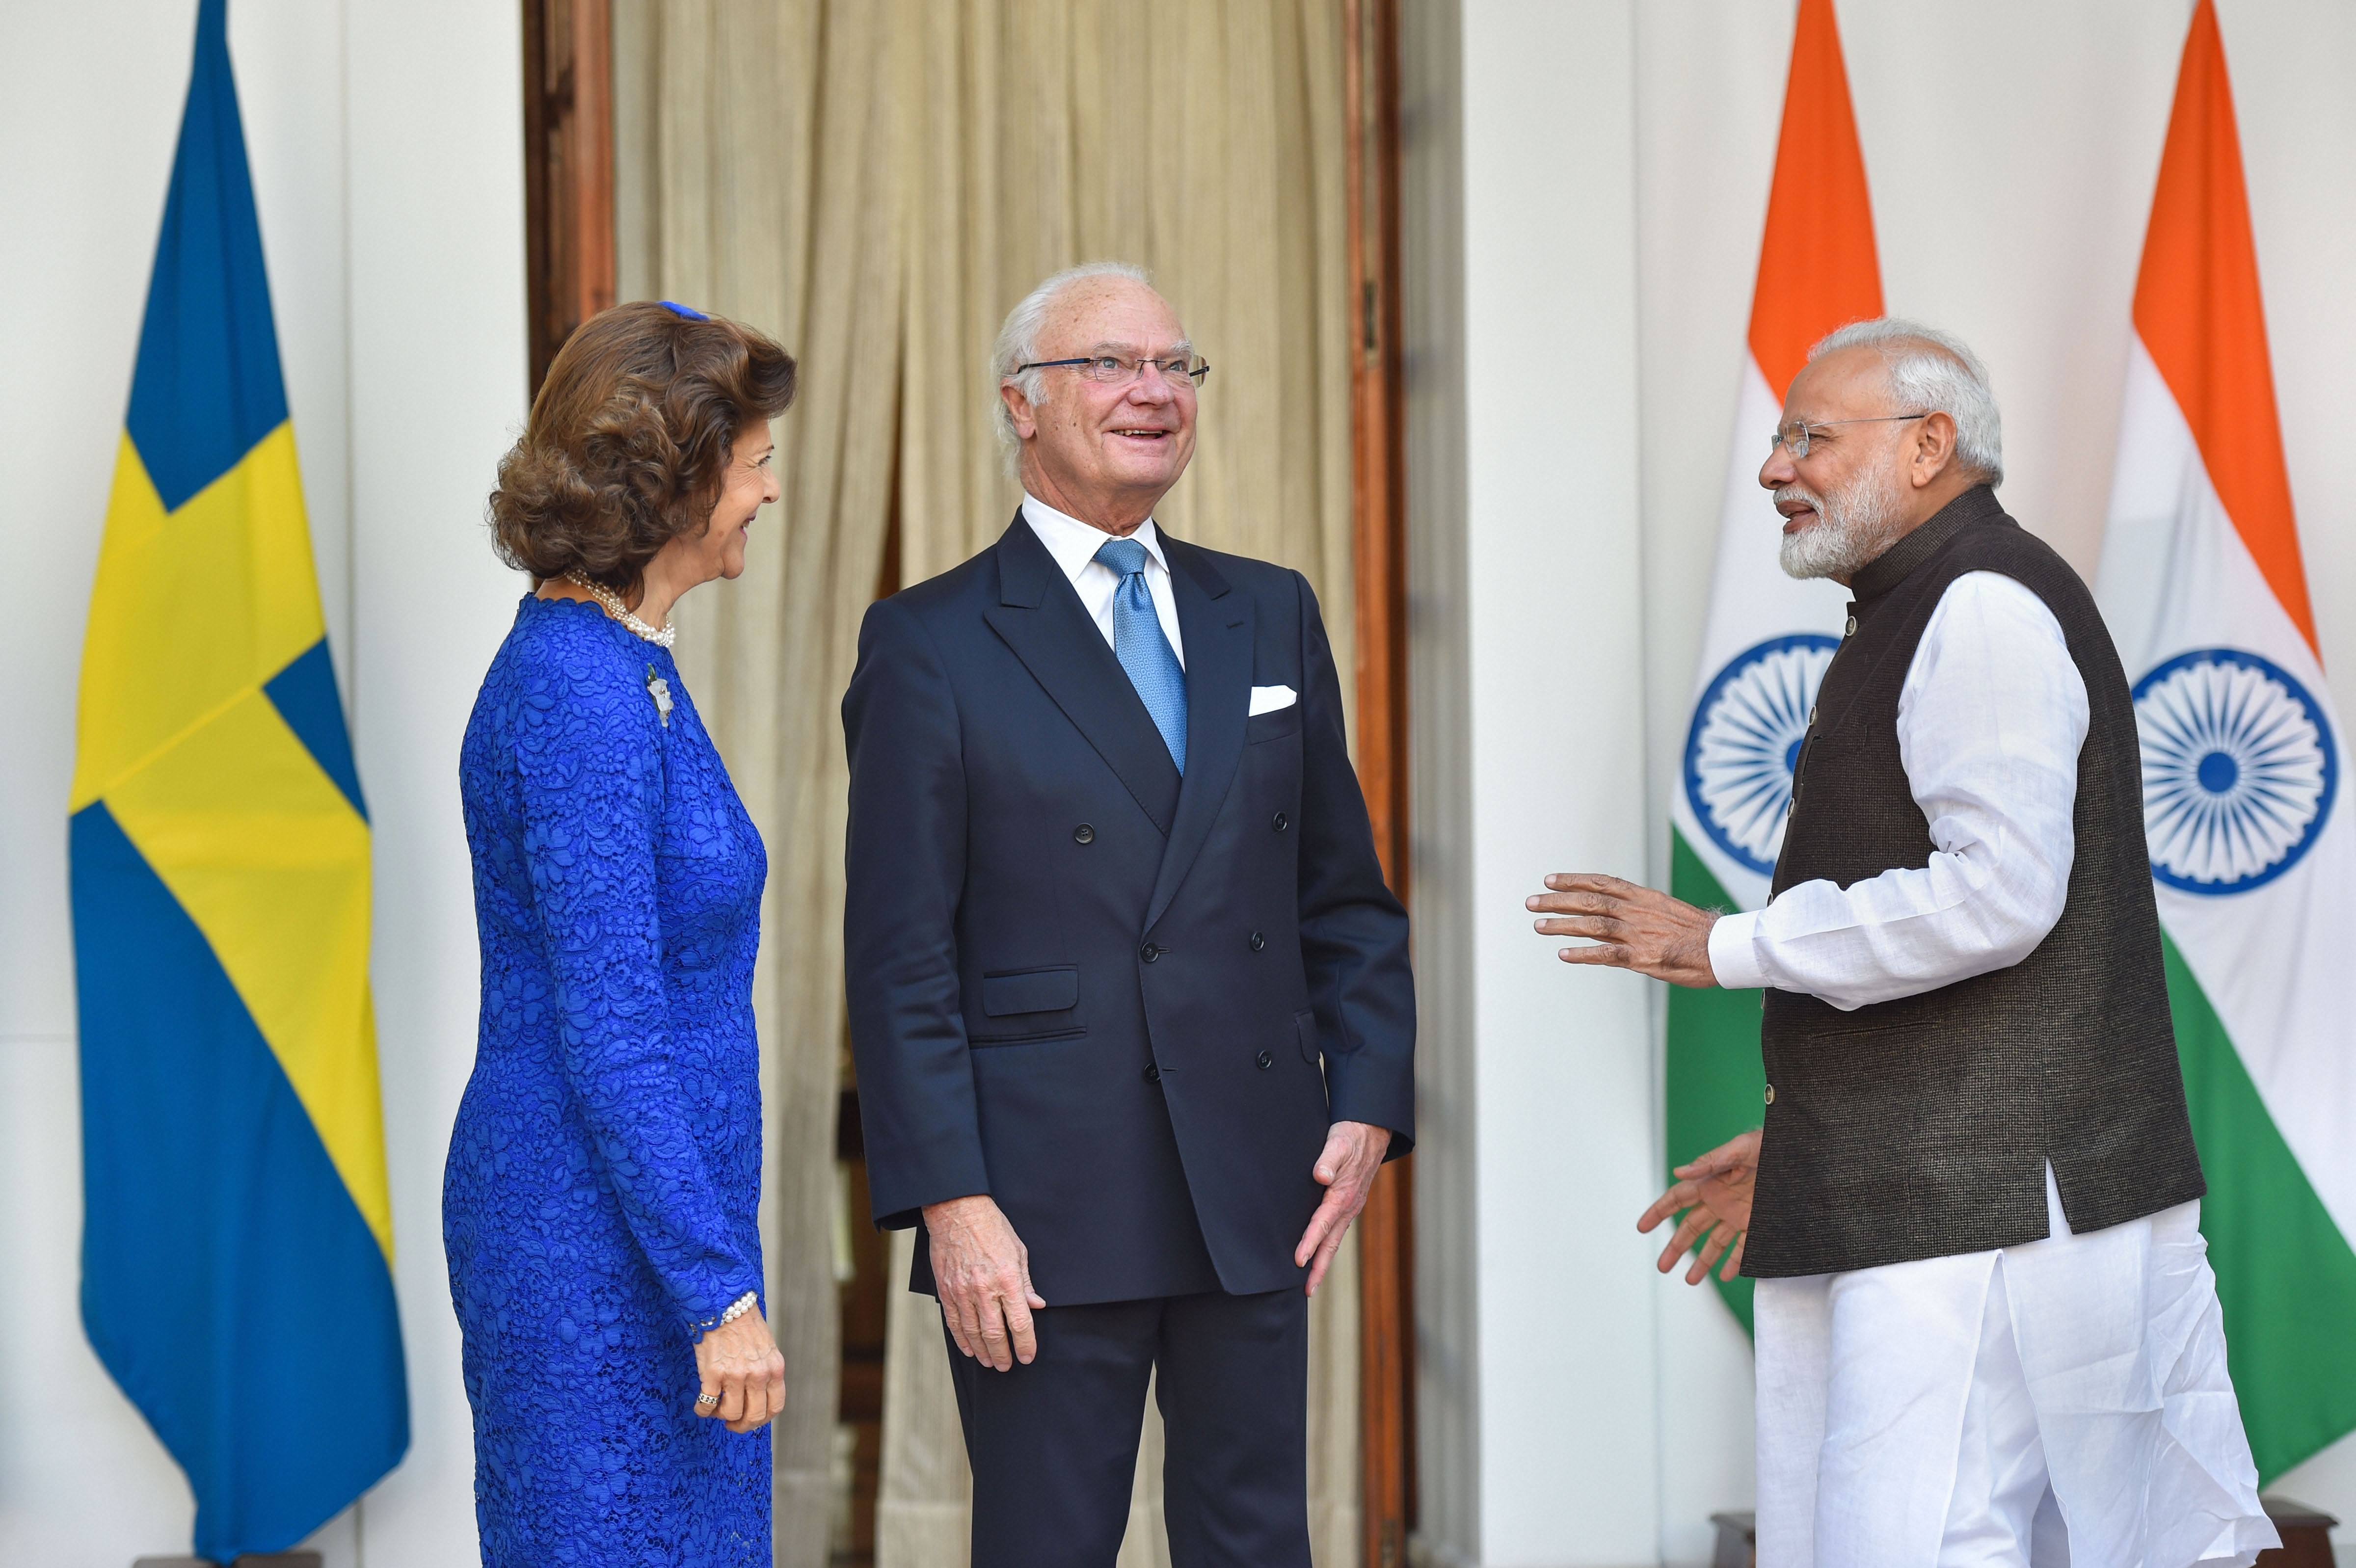 King Carl XVI Gustaf, Queen Silvia, Sweden, Prime Minister Narendra Modi, meet, 5-day visit to India, bilateral ties,